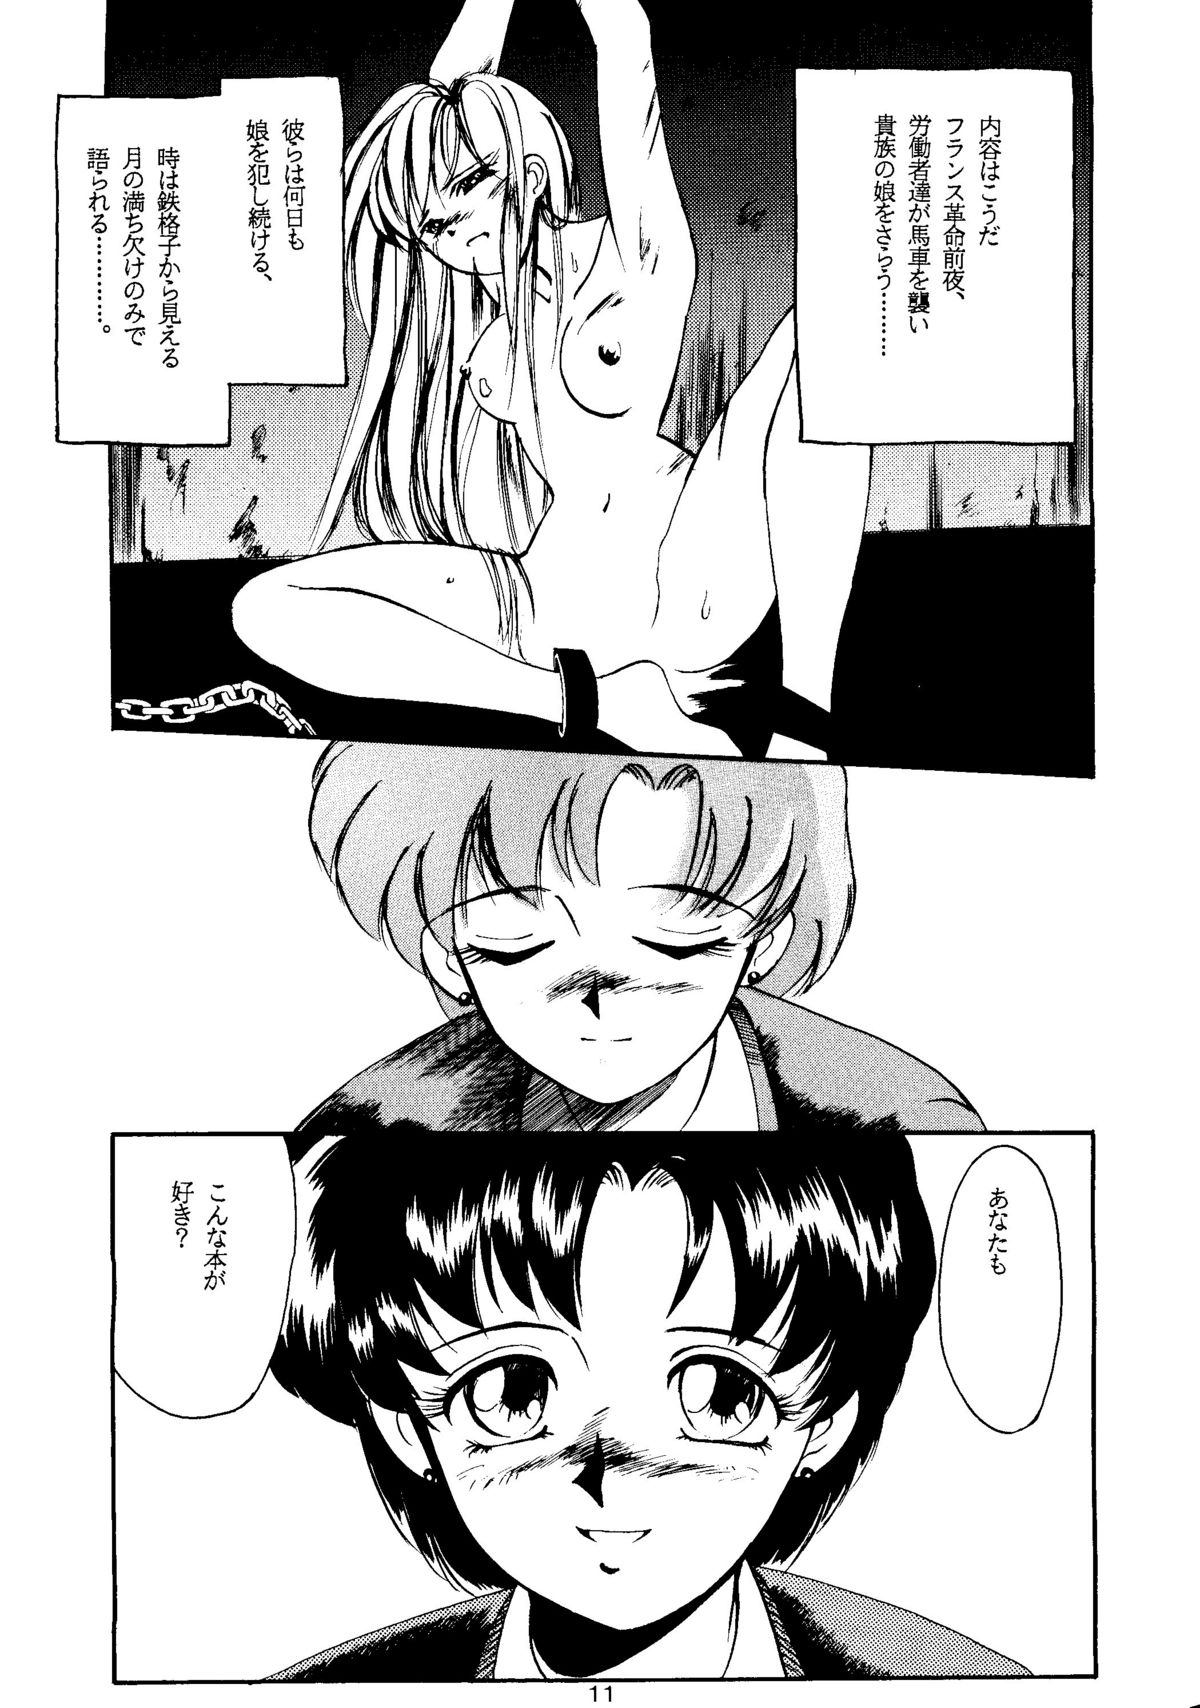 [T2 UNIT, RyuukiSya, Sakura ROC (Various)] LUNATIC ASYLUM (Sailor Moon) [T2 UNIT , 隆起社 , 櫻會 (よろず)] LUNATIC ASYLUM (セーラームーン)